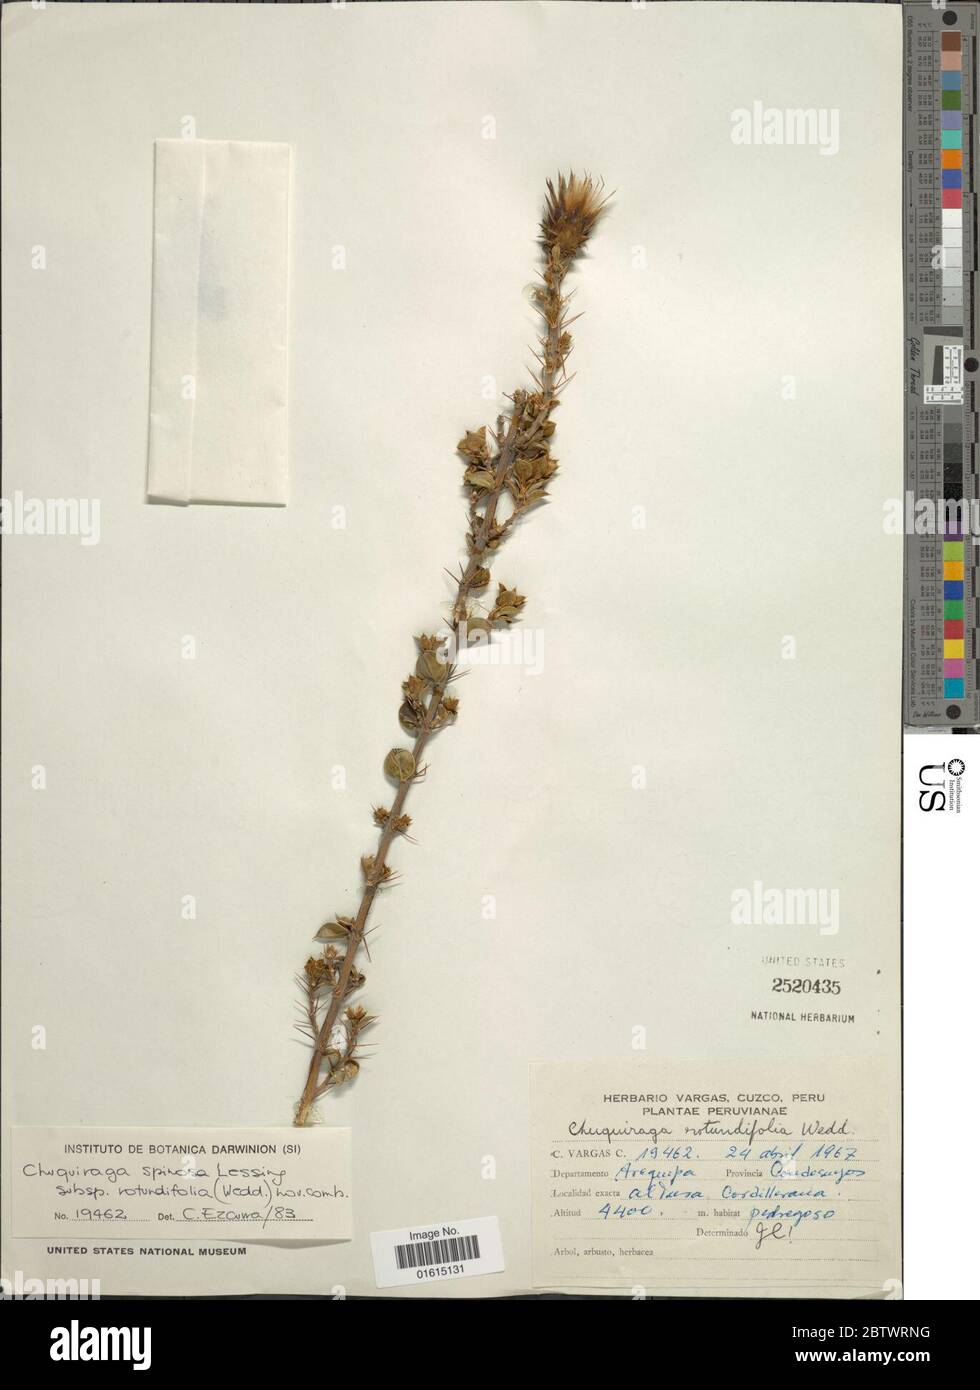 Chuquiraga spinosa subsp rotundifolia Wedd C Ezcurra. Stock Photo